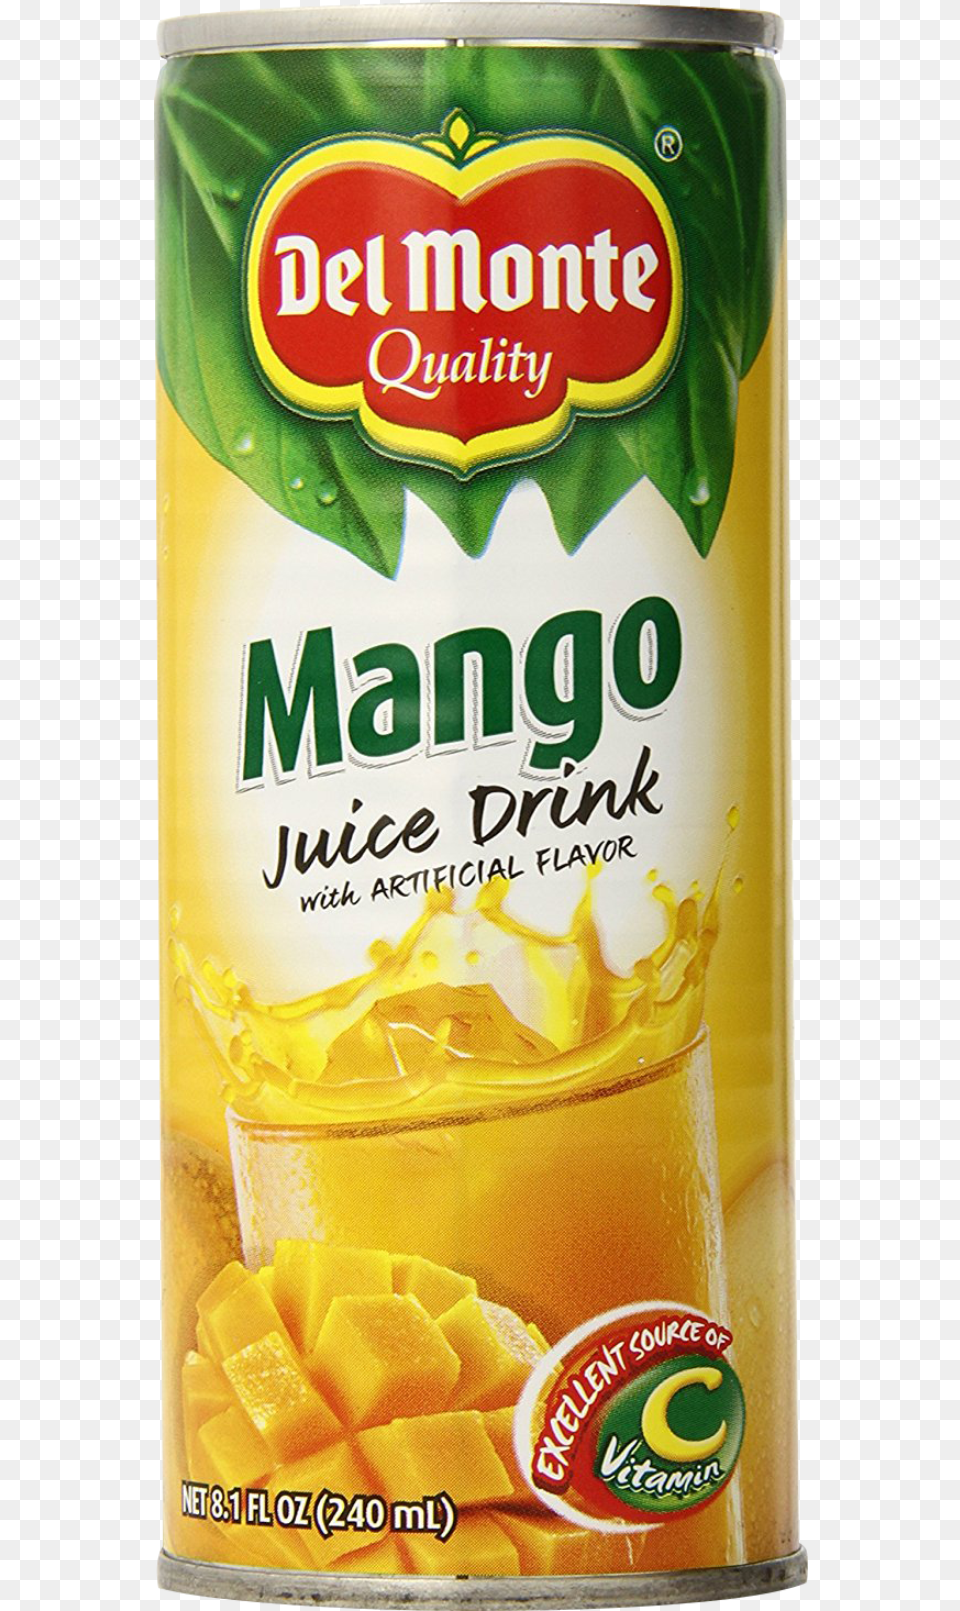 Del Monte Mango Juice 240ml Mango Juice In Can Del Monte, Tin, Beverage Free Png